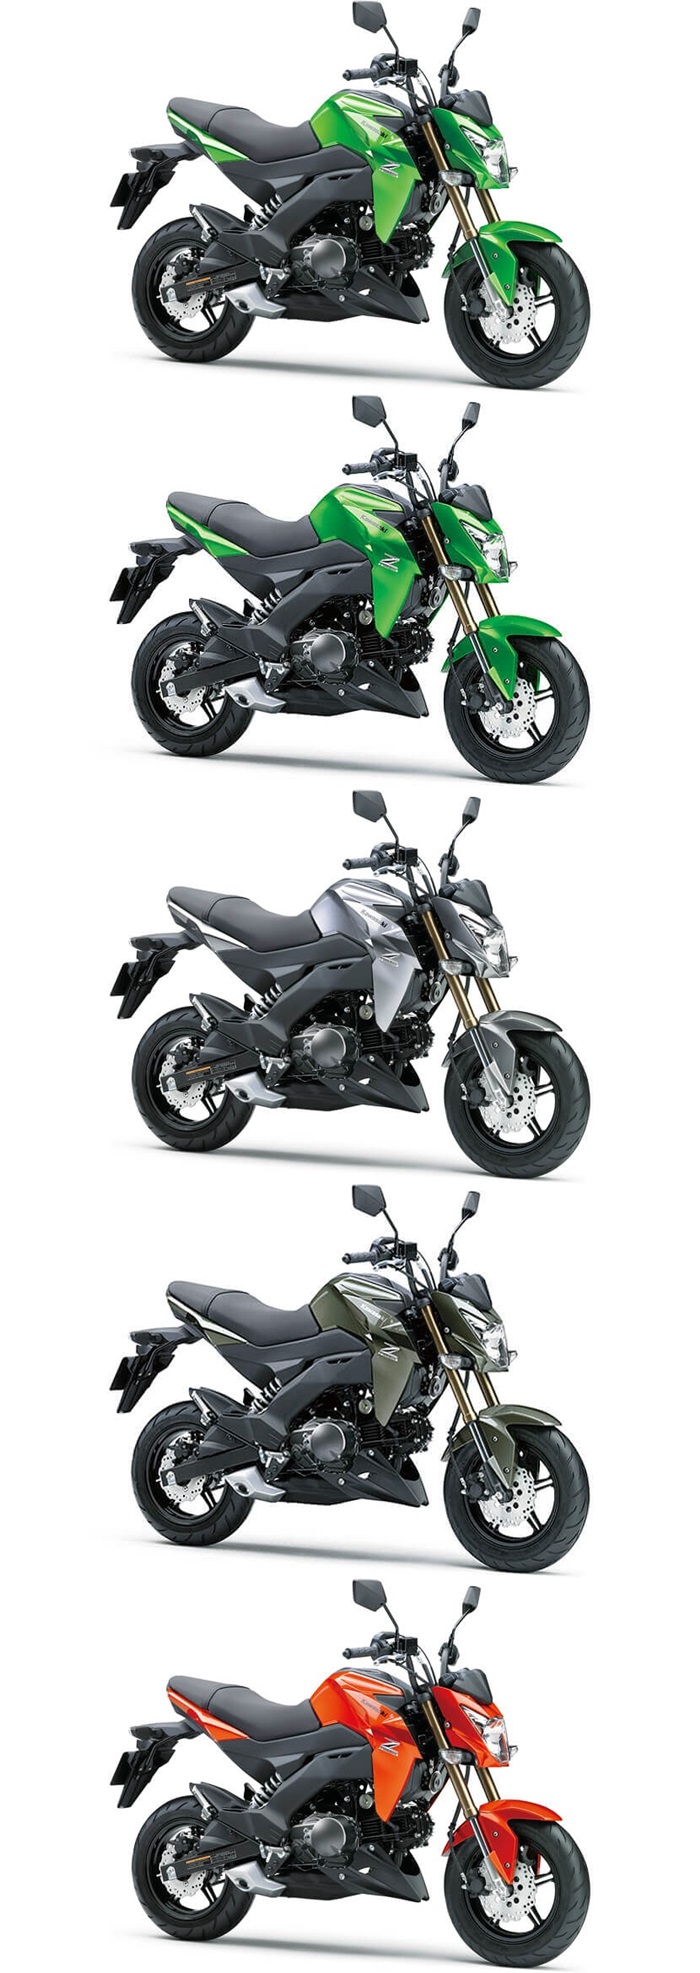 ​Kawasaki Z125 สีเขียว Candy Lime Green, สีเขียว Candy Flat Blazed Green, สีเทา Metallic, สีเทา METCOURAGE และสีส้ม